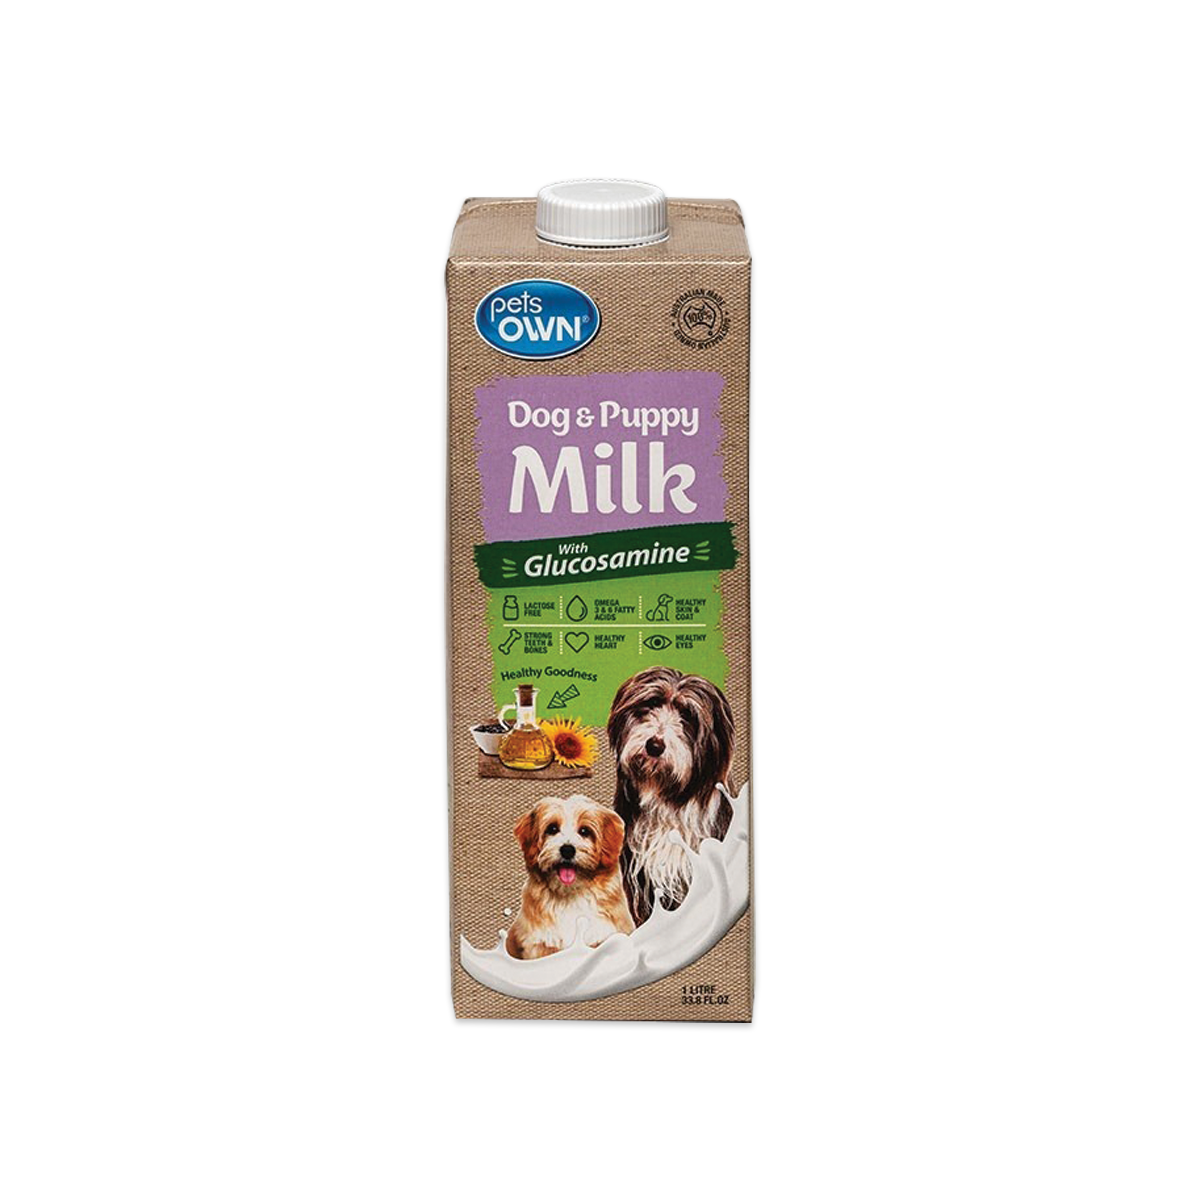 Pets Own Dog&Puppy Milk with Glucosamine เพ็ทส์โอน นมสำหรับลูกสุนัขและสุนัขโต ขนาด 1000 มล.